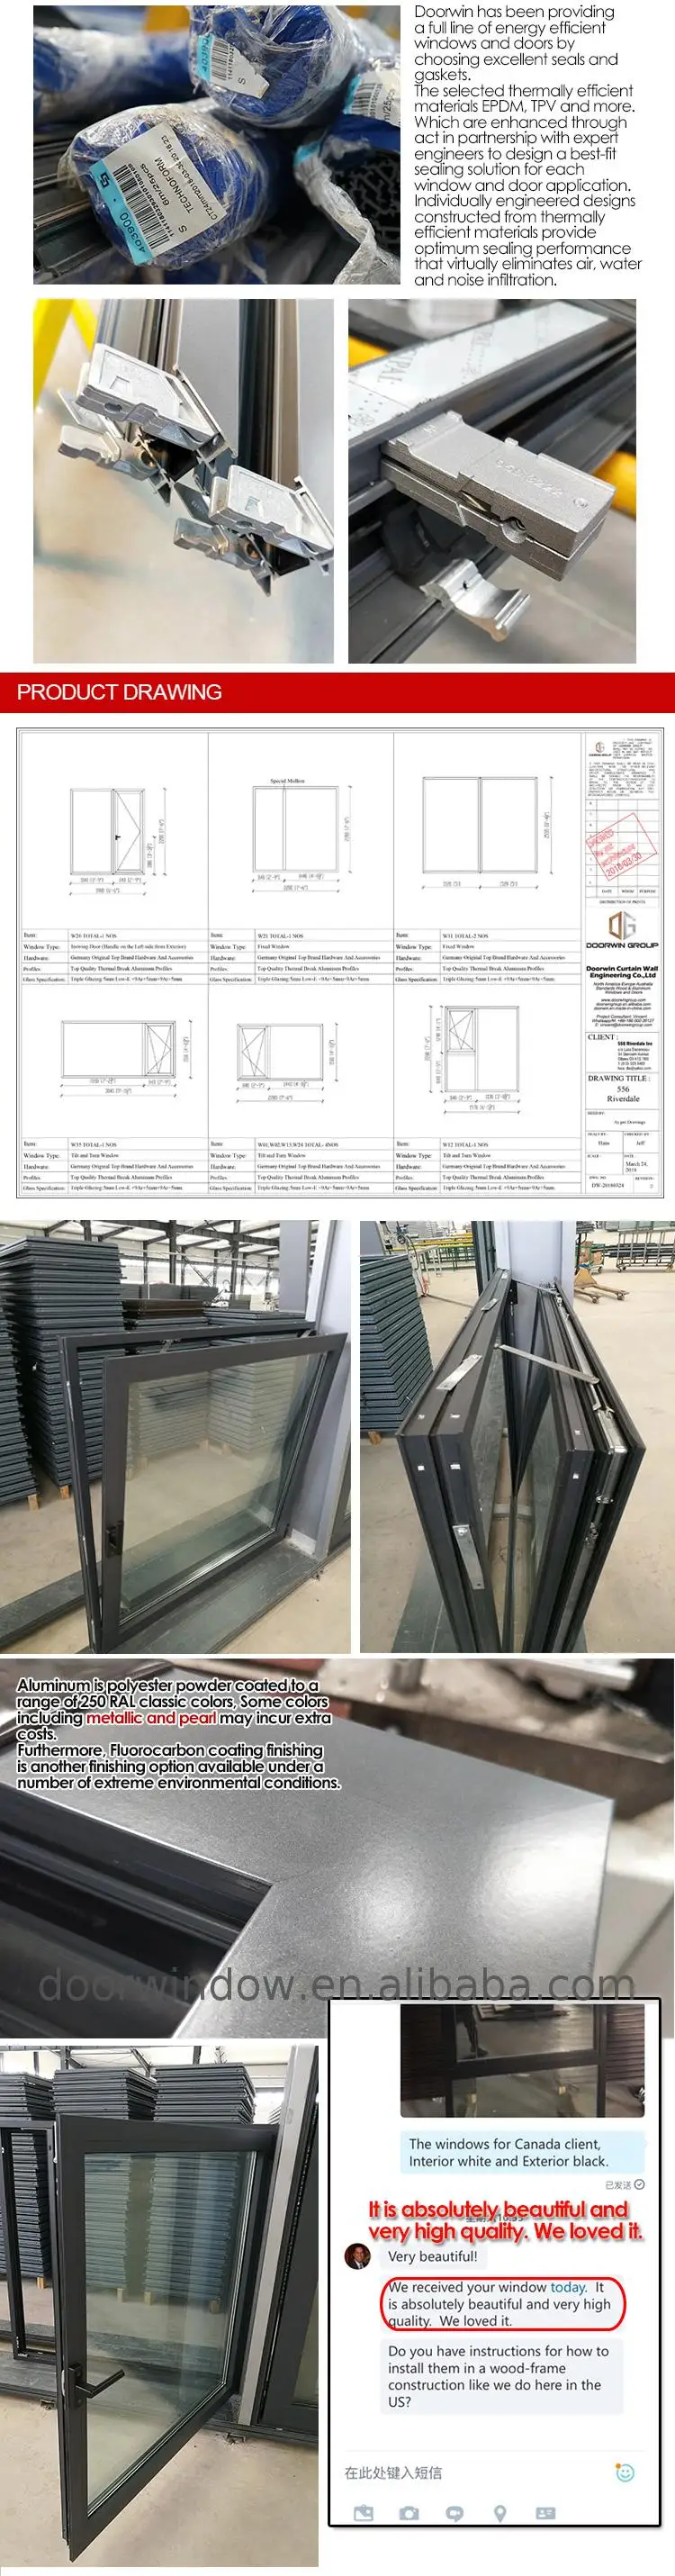 Awning window american grill design aluminum tilt & turn